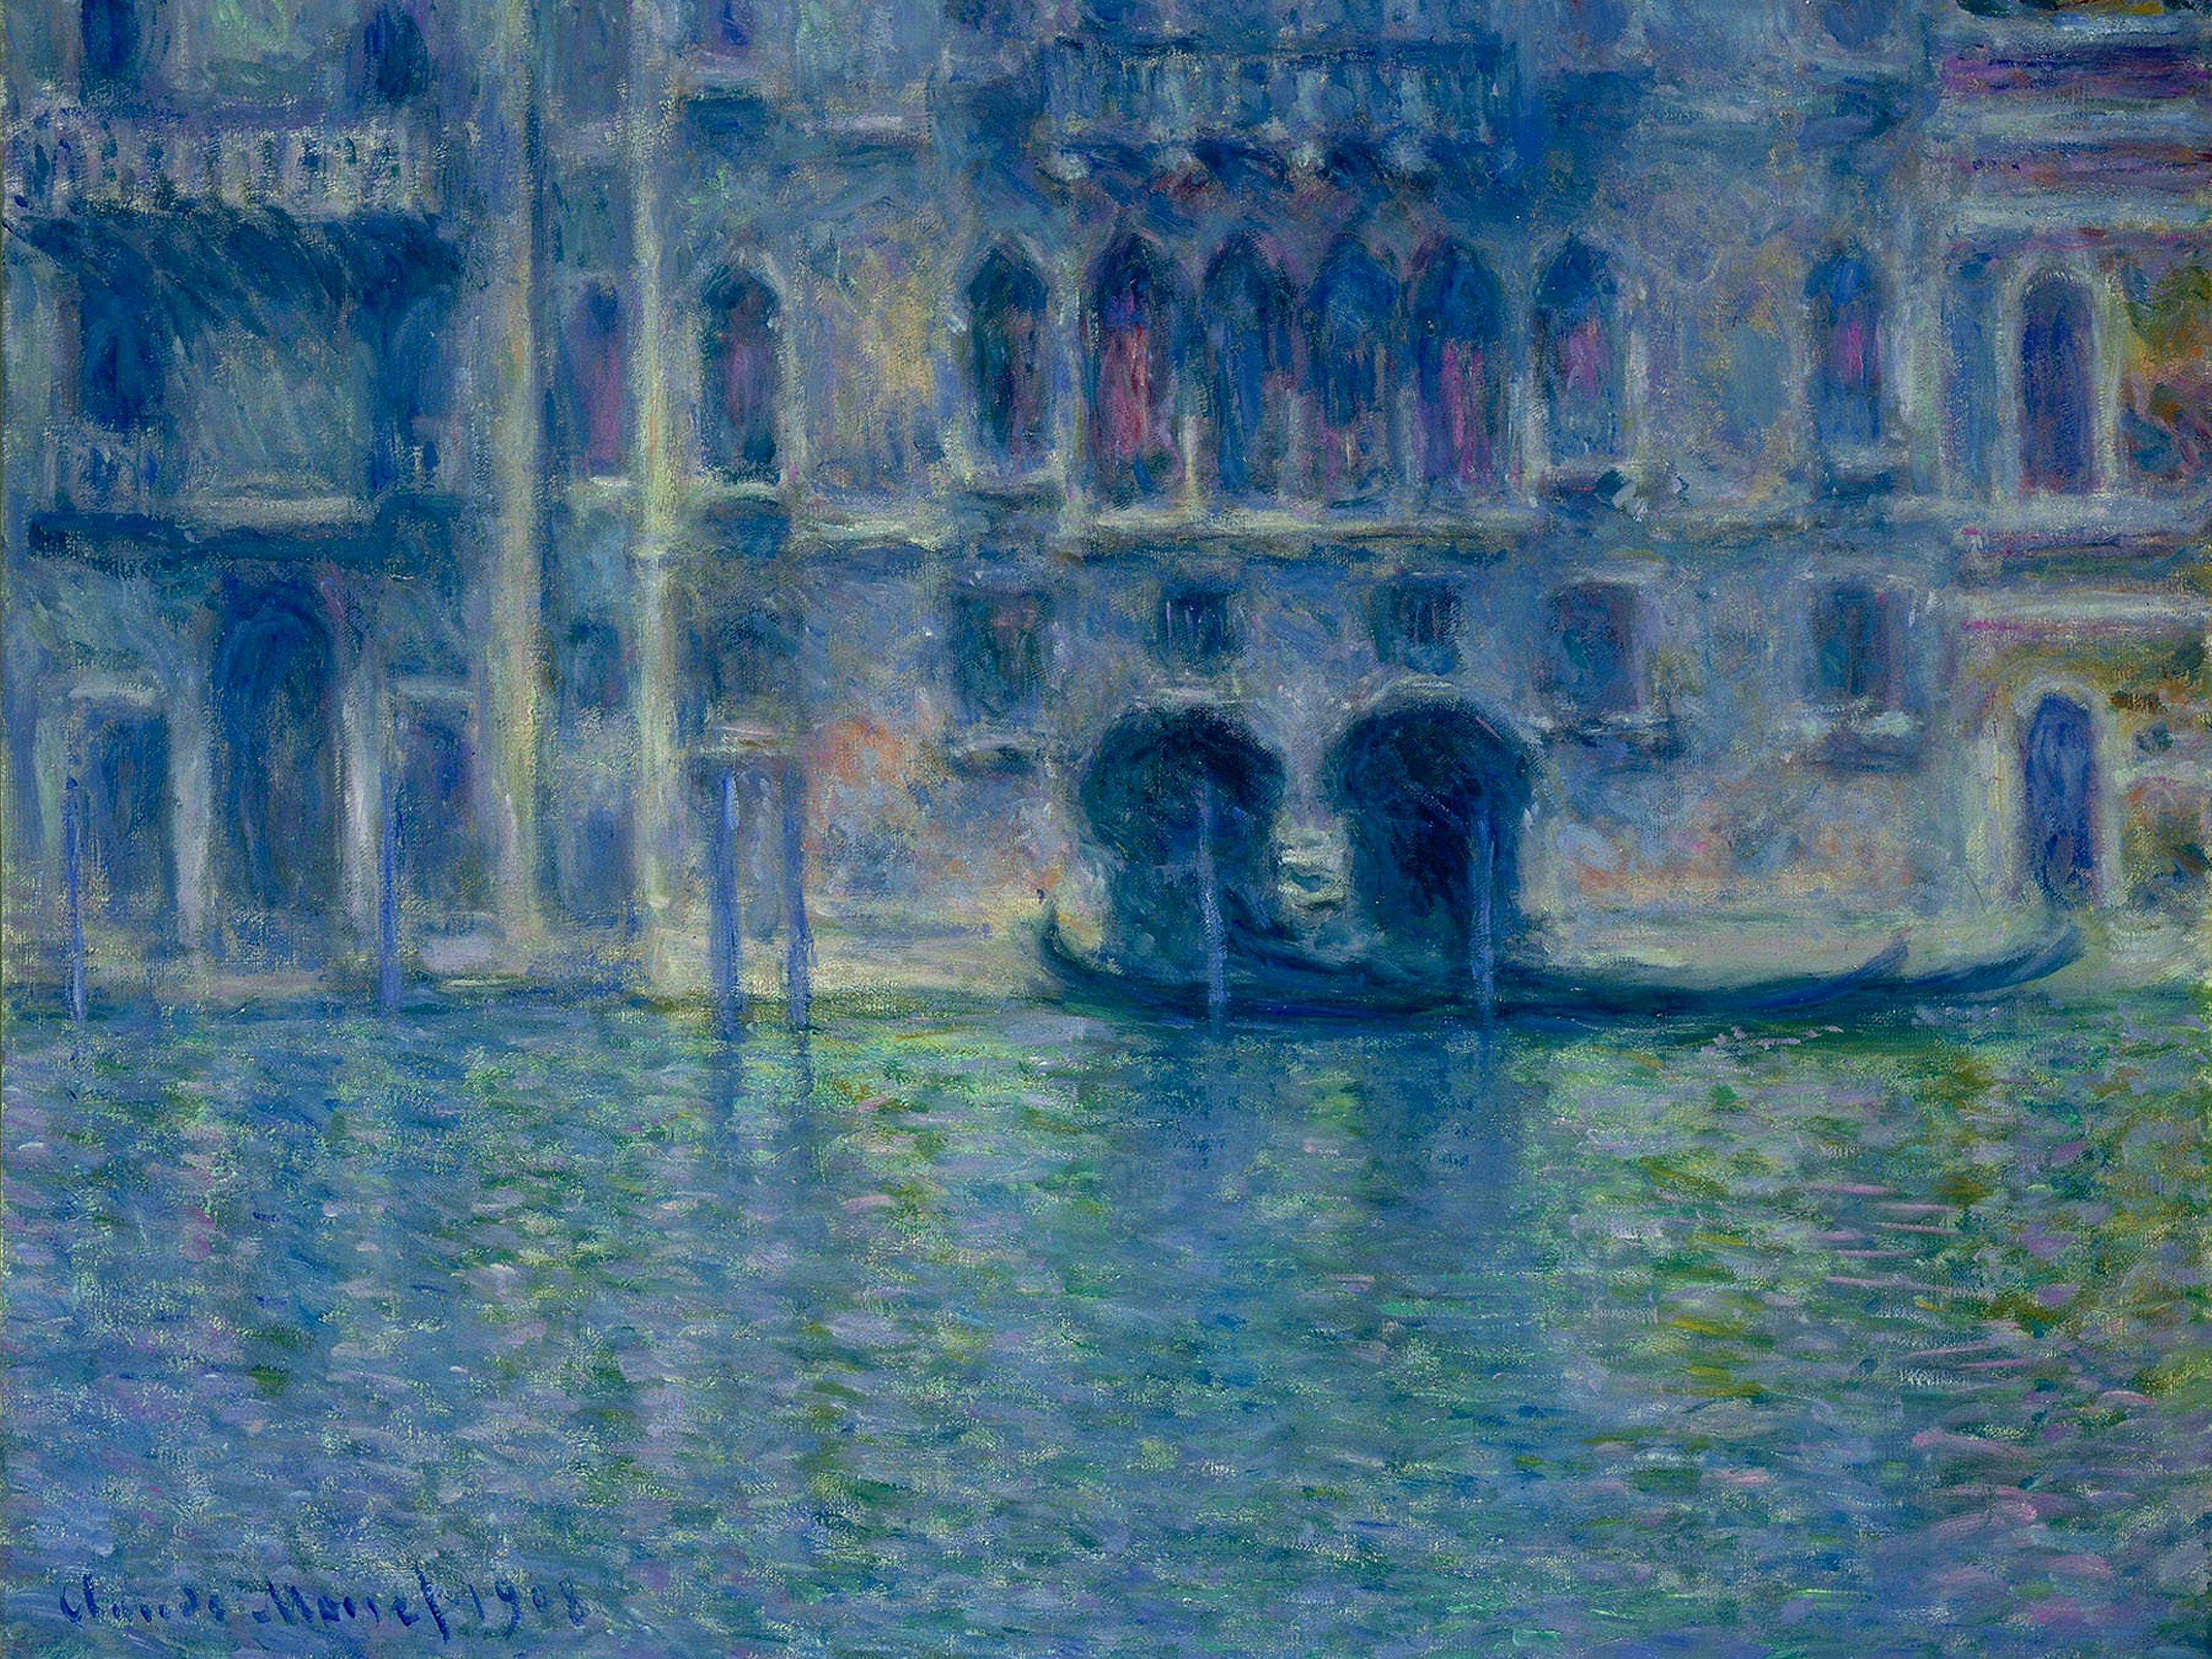 Palazzo da Mula, Benátky by Claude Monet - 1908 - 61.4 x 80.5 cm 